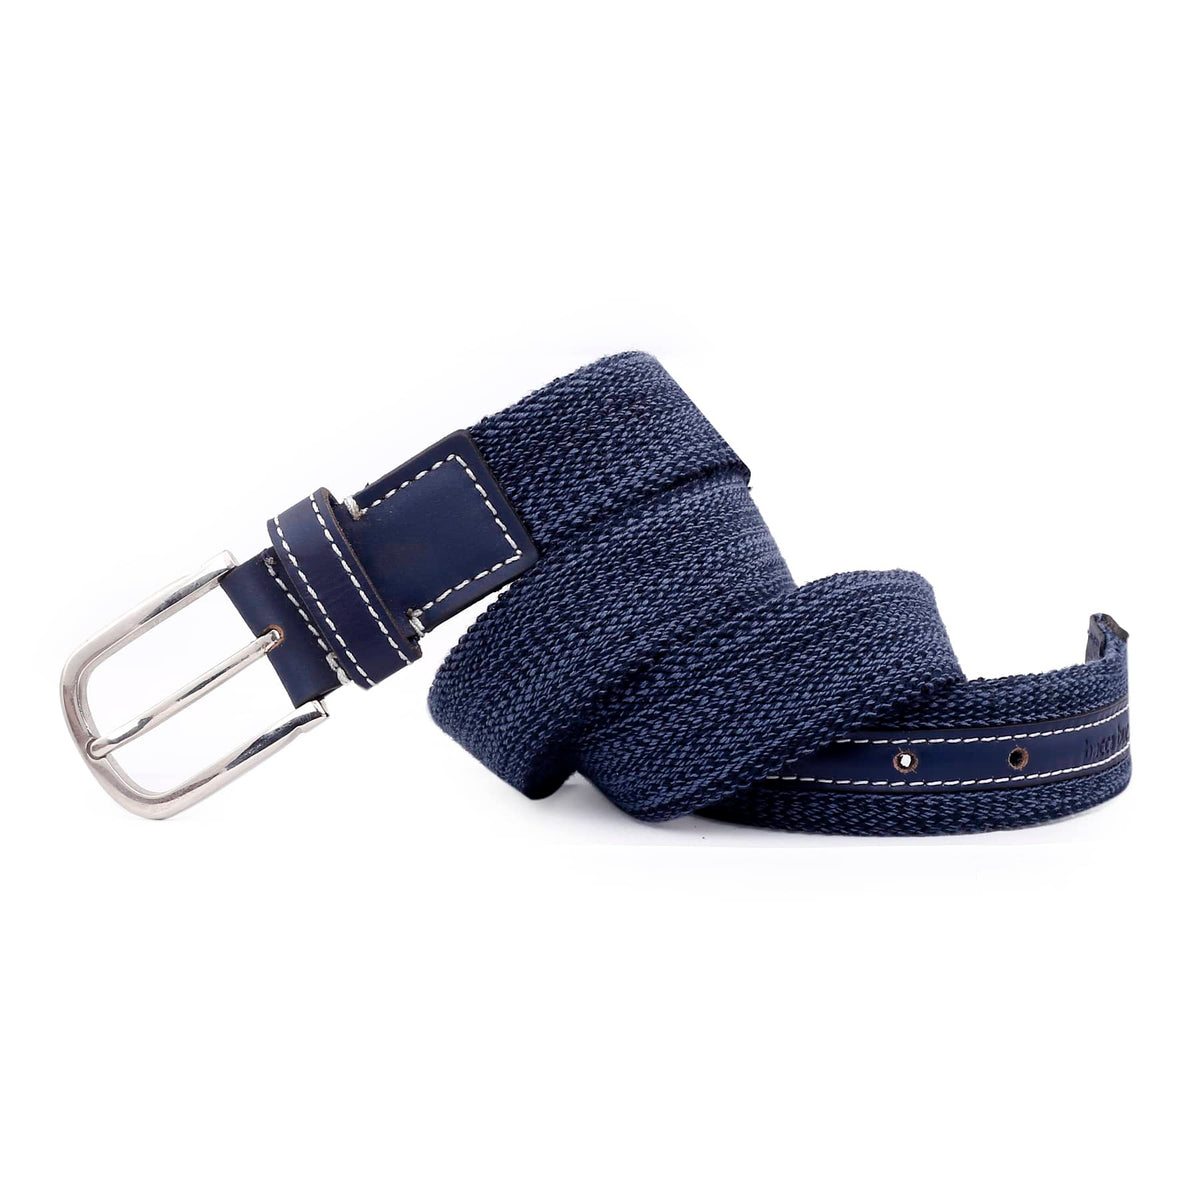 Cotton Belt - Buy Cotton Belt online in India